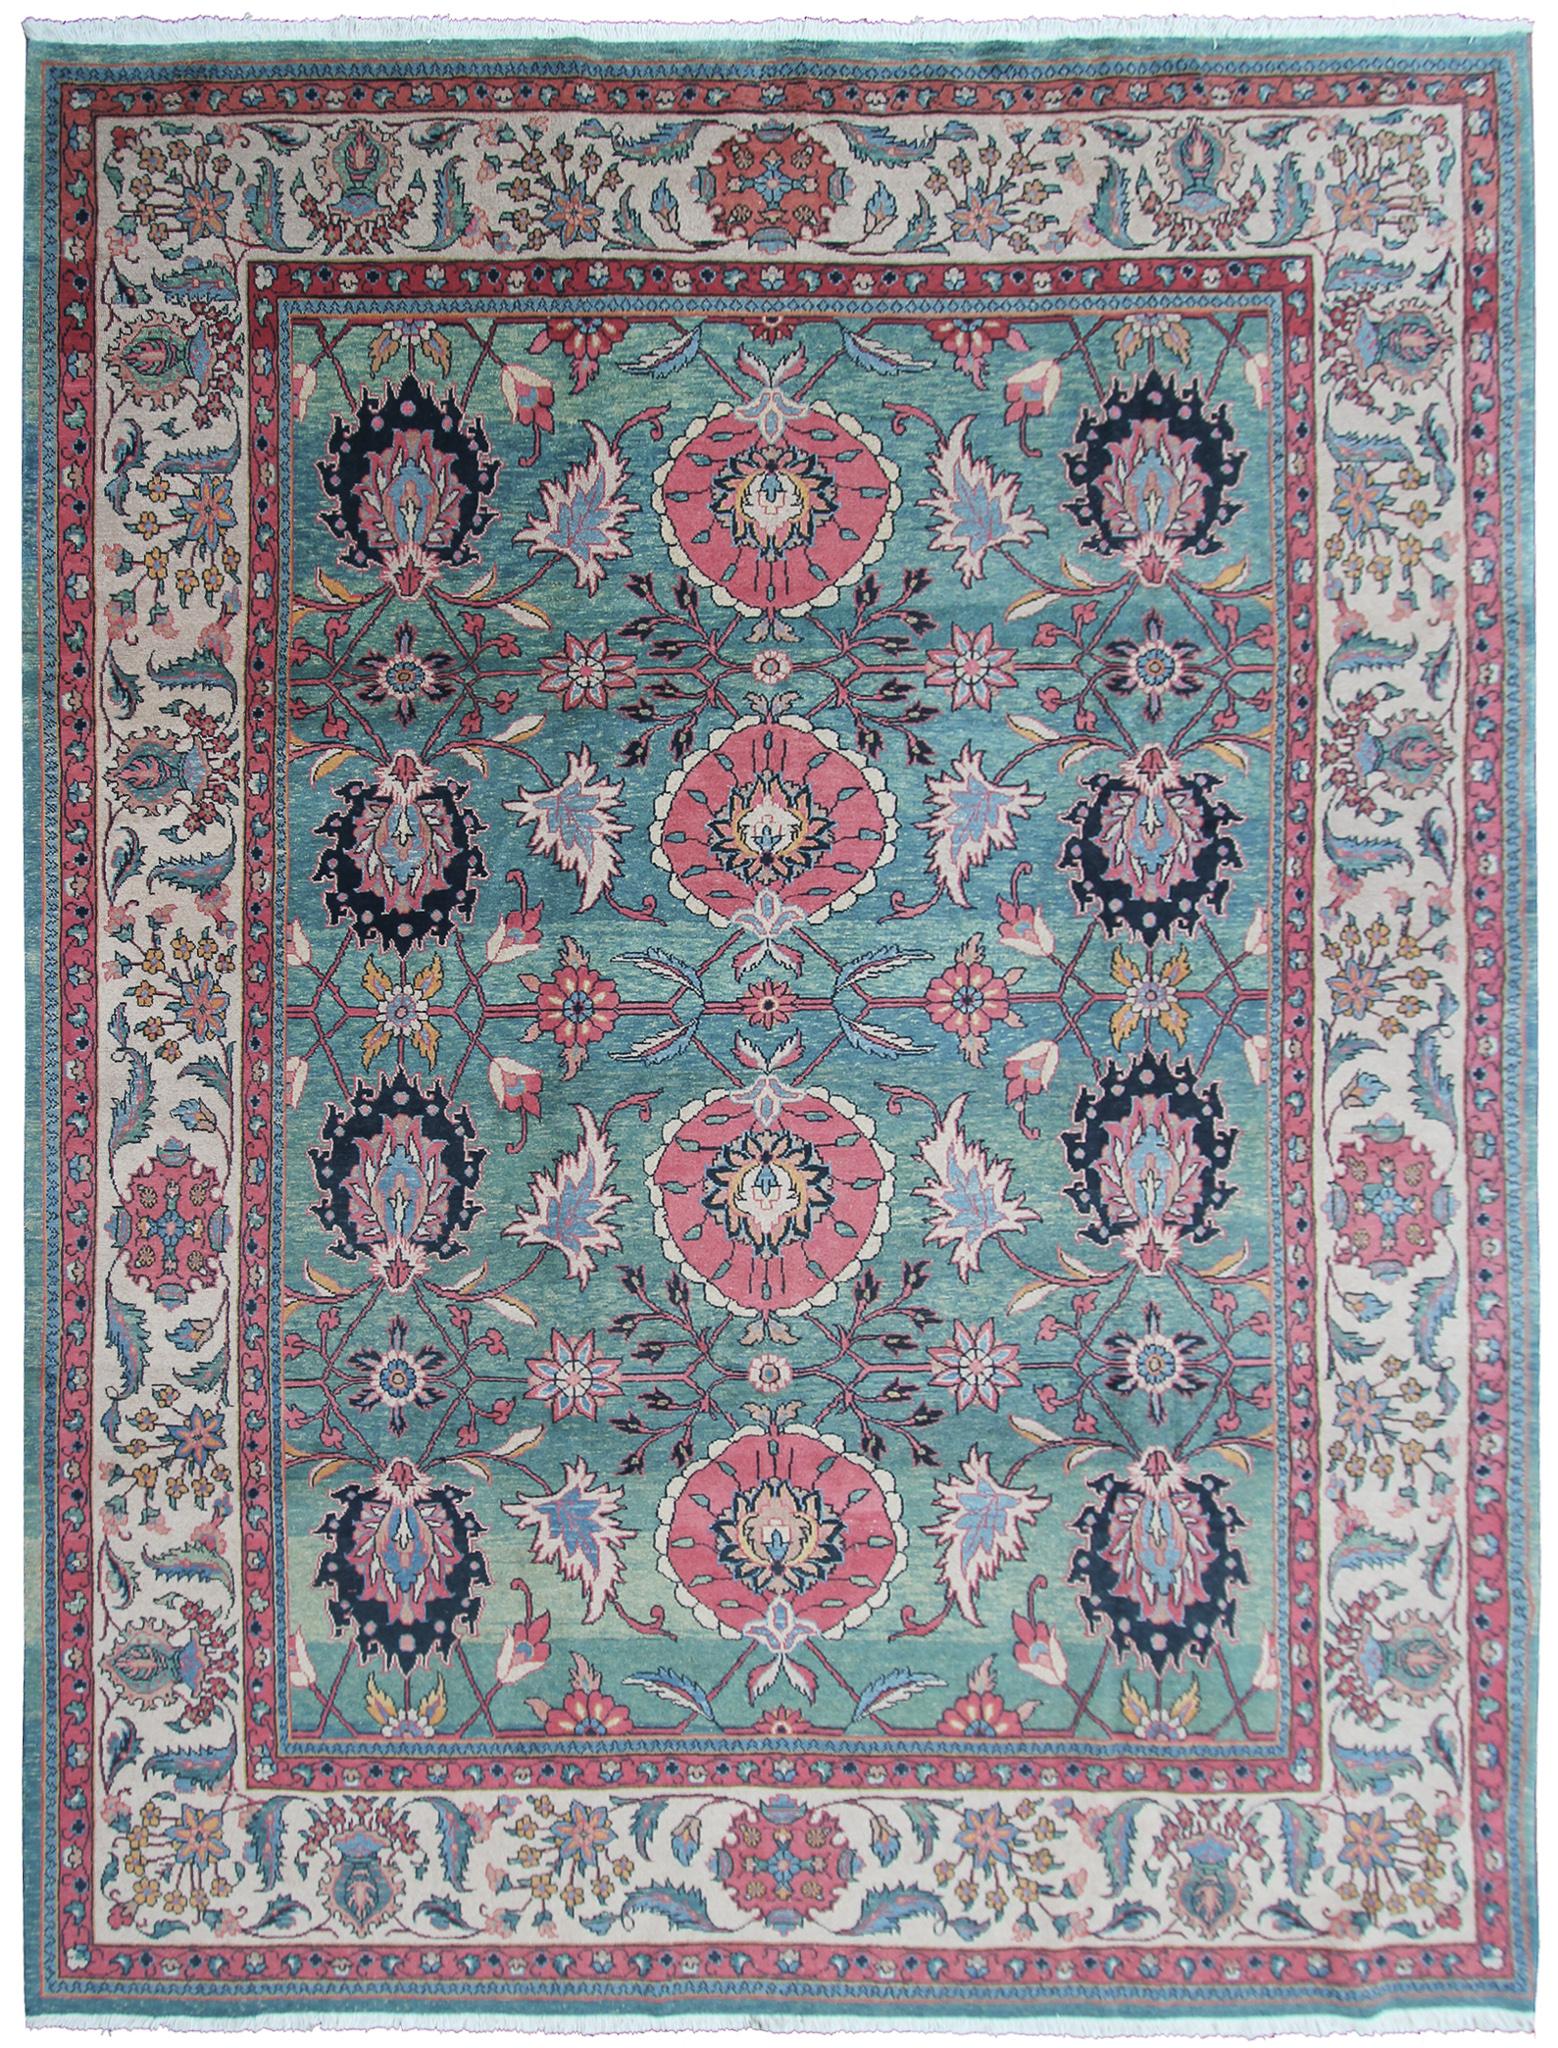 Incredible vintage mahal rug rug sultanabad rug area rug

9'8